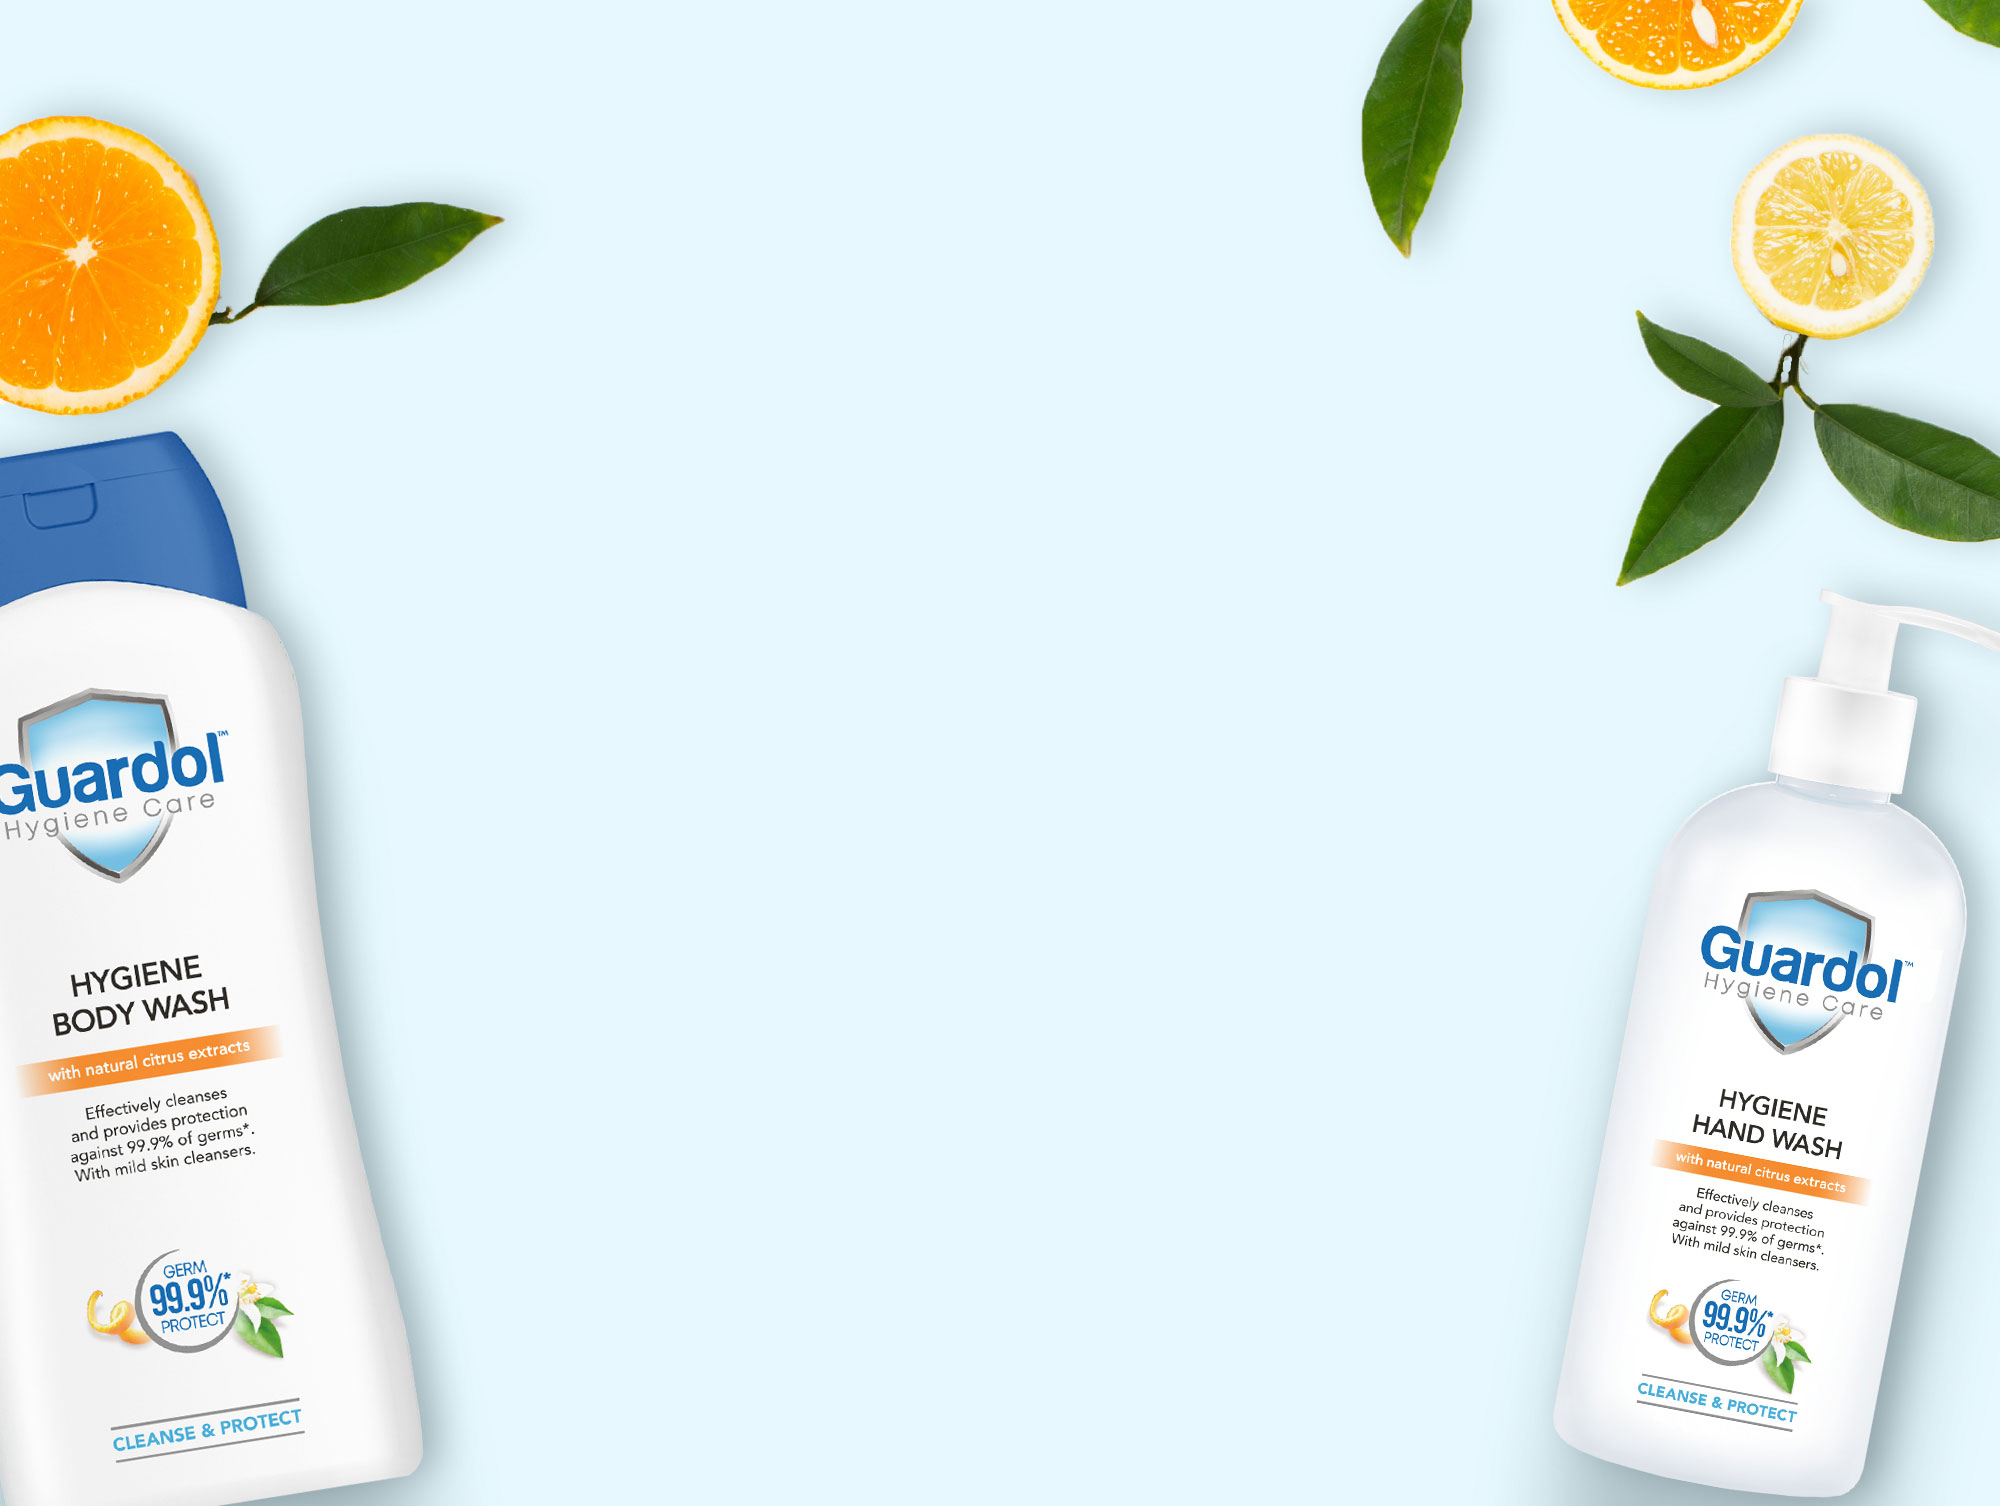 Guardol Hygiene Care Citrus range ingredients